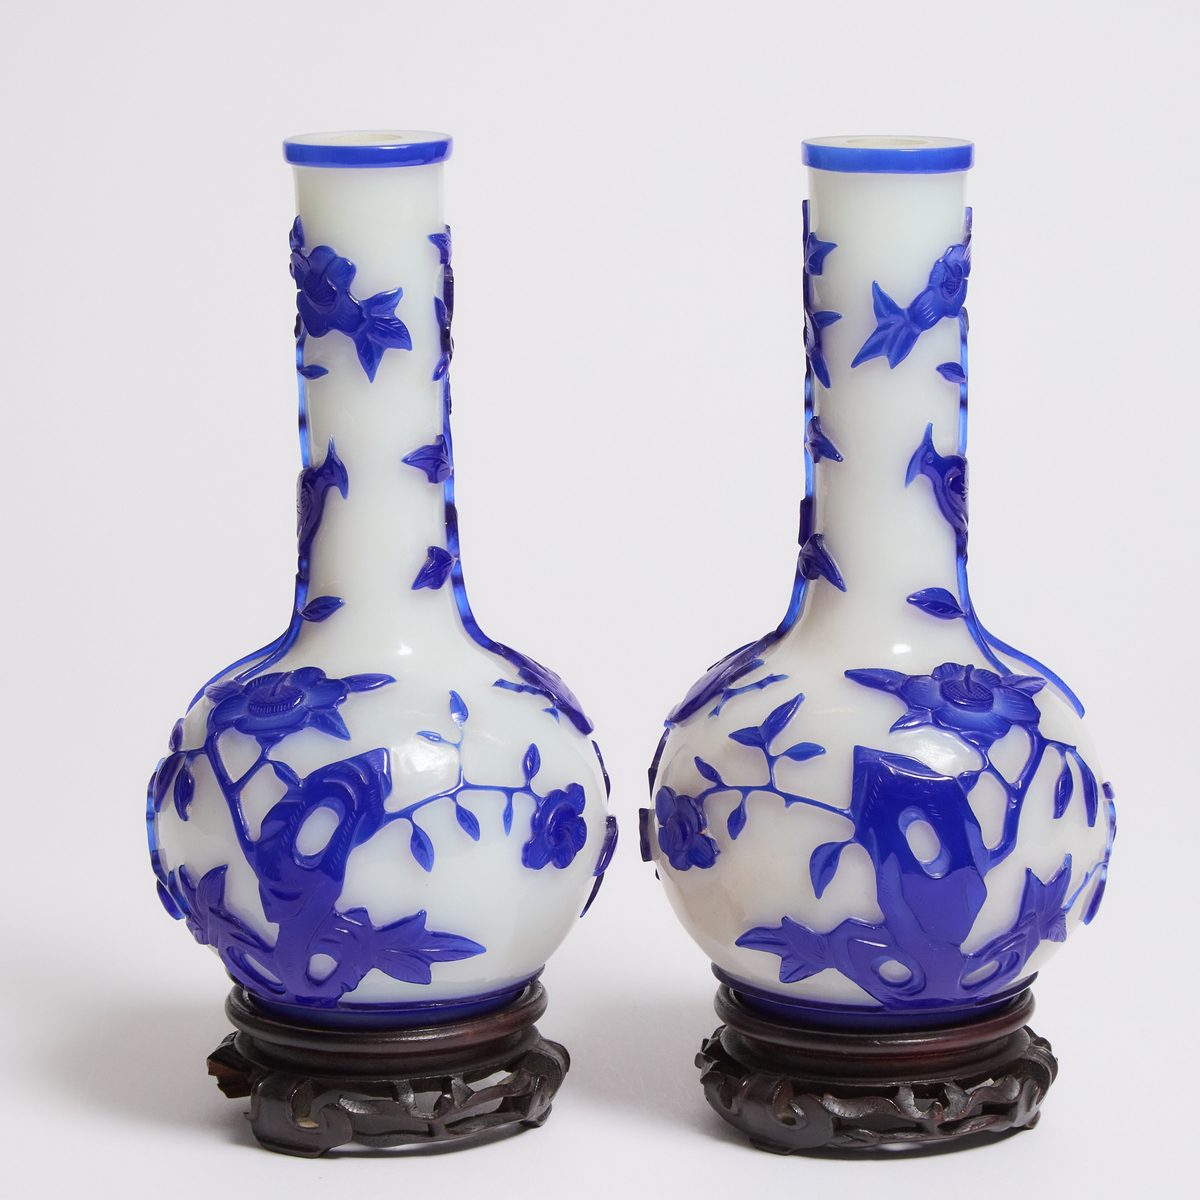 A Pair of Blue Overlay Glass 'Birds and Flowers' Bottle Vases, 20th Century, 二十世纪 涅白地套蓝料花鸟纹瓶一对, vase - Image 2 of 3